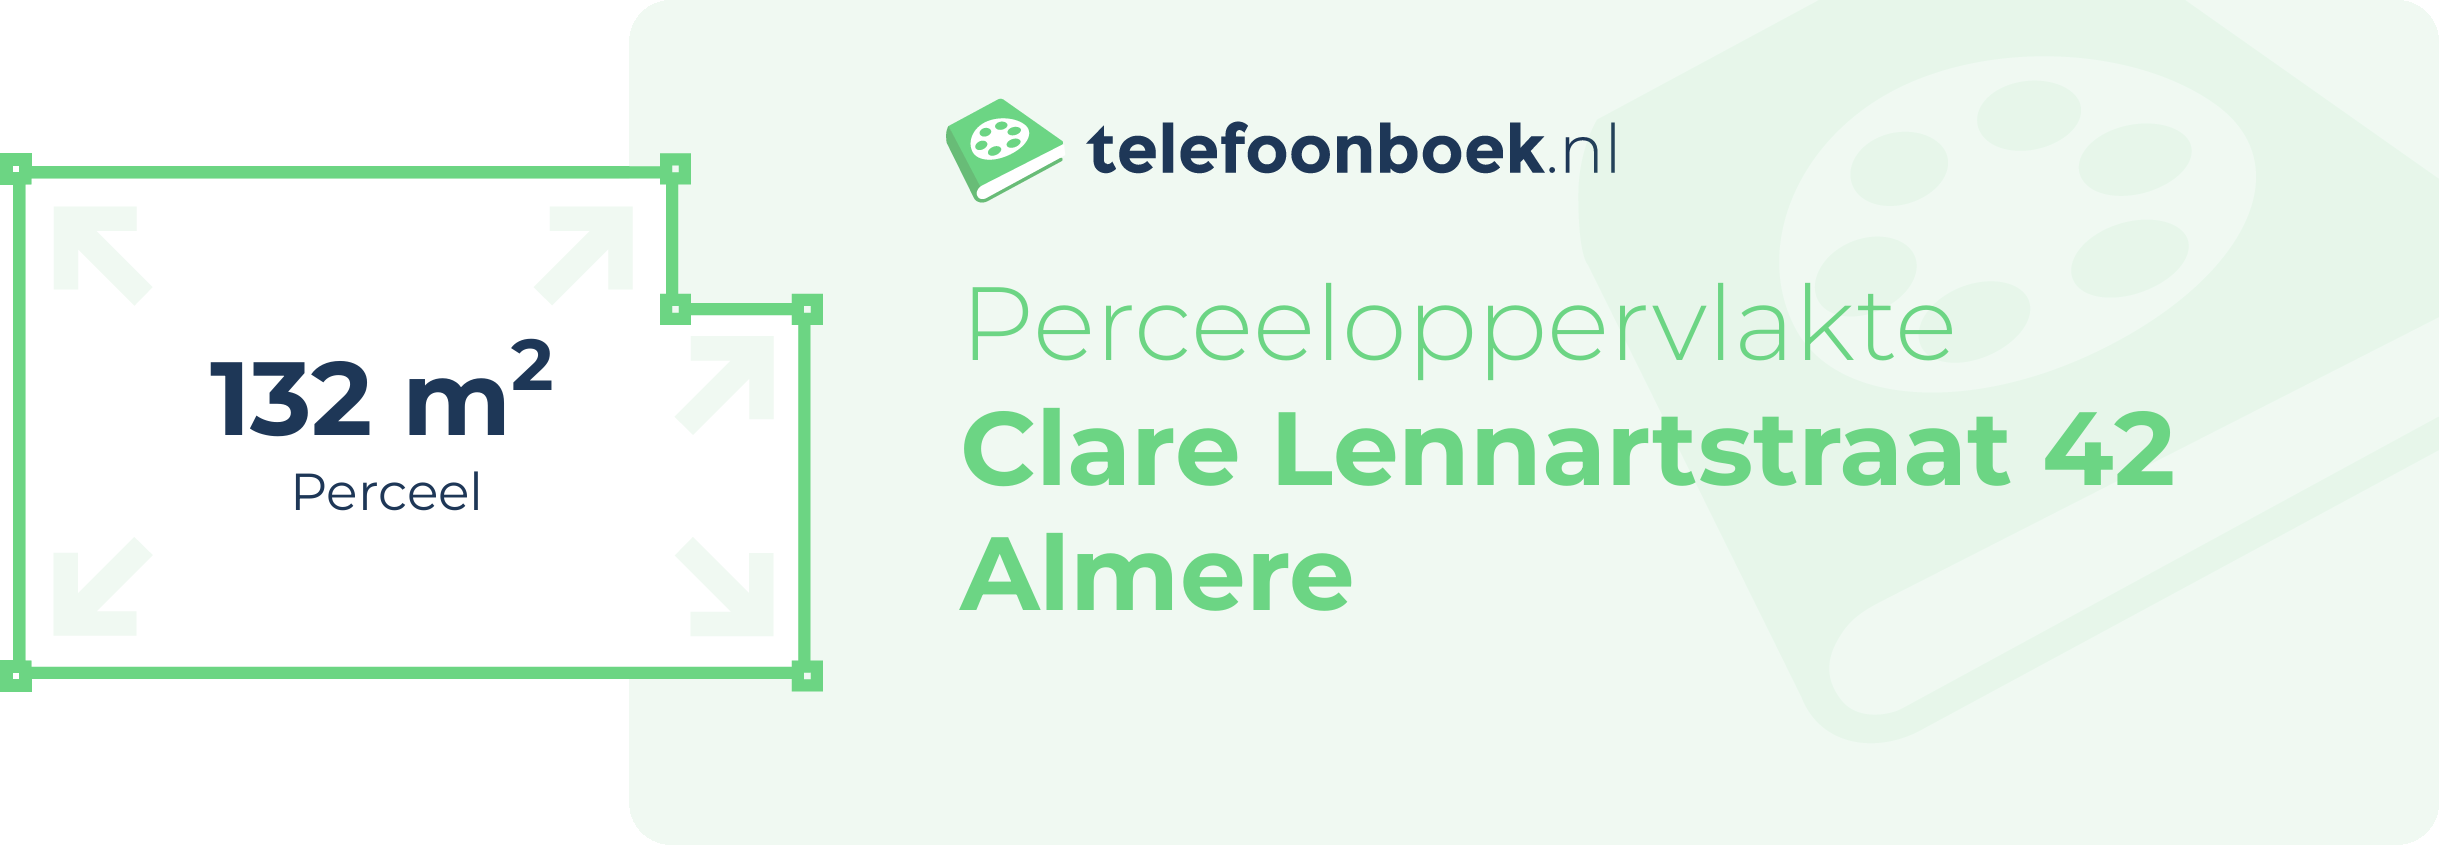 Perceeloppervlakte Clare Lennartstraat 42 Almere